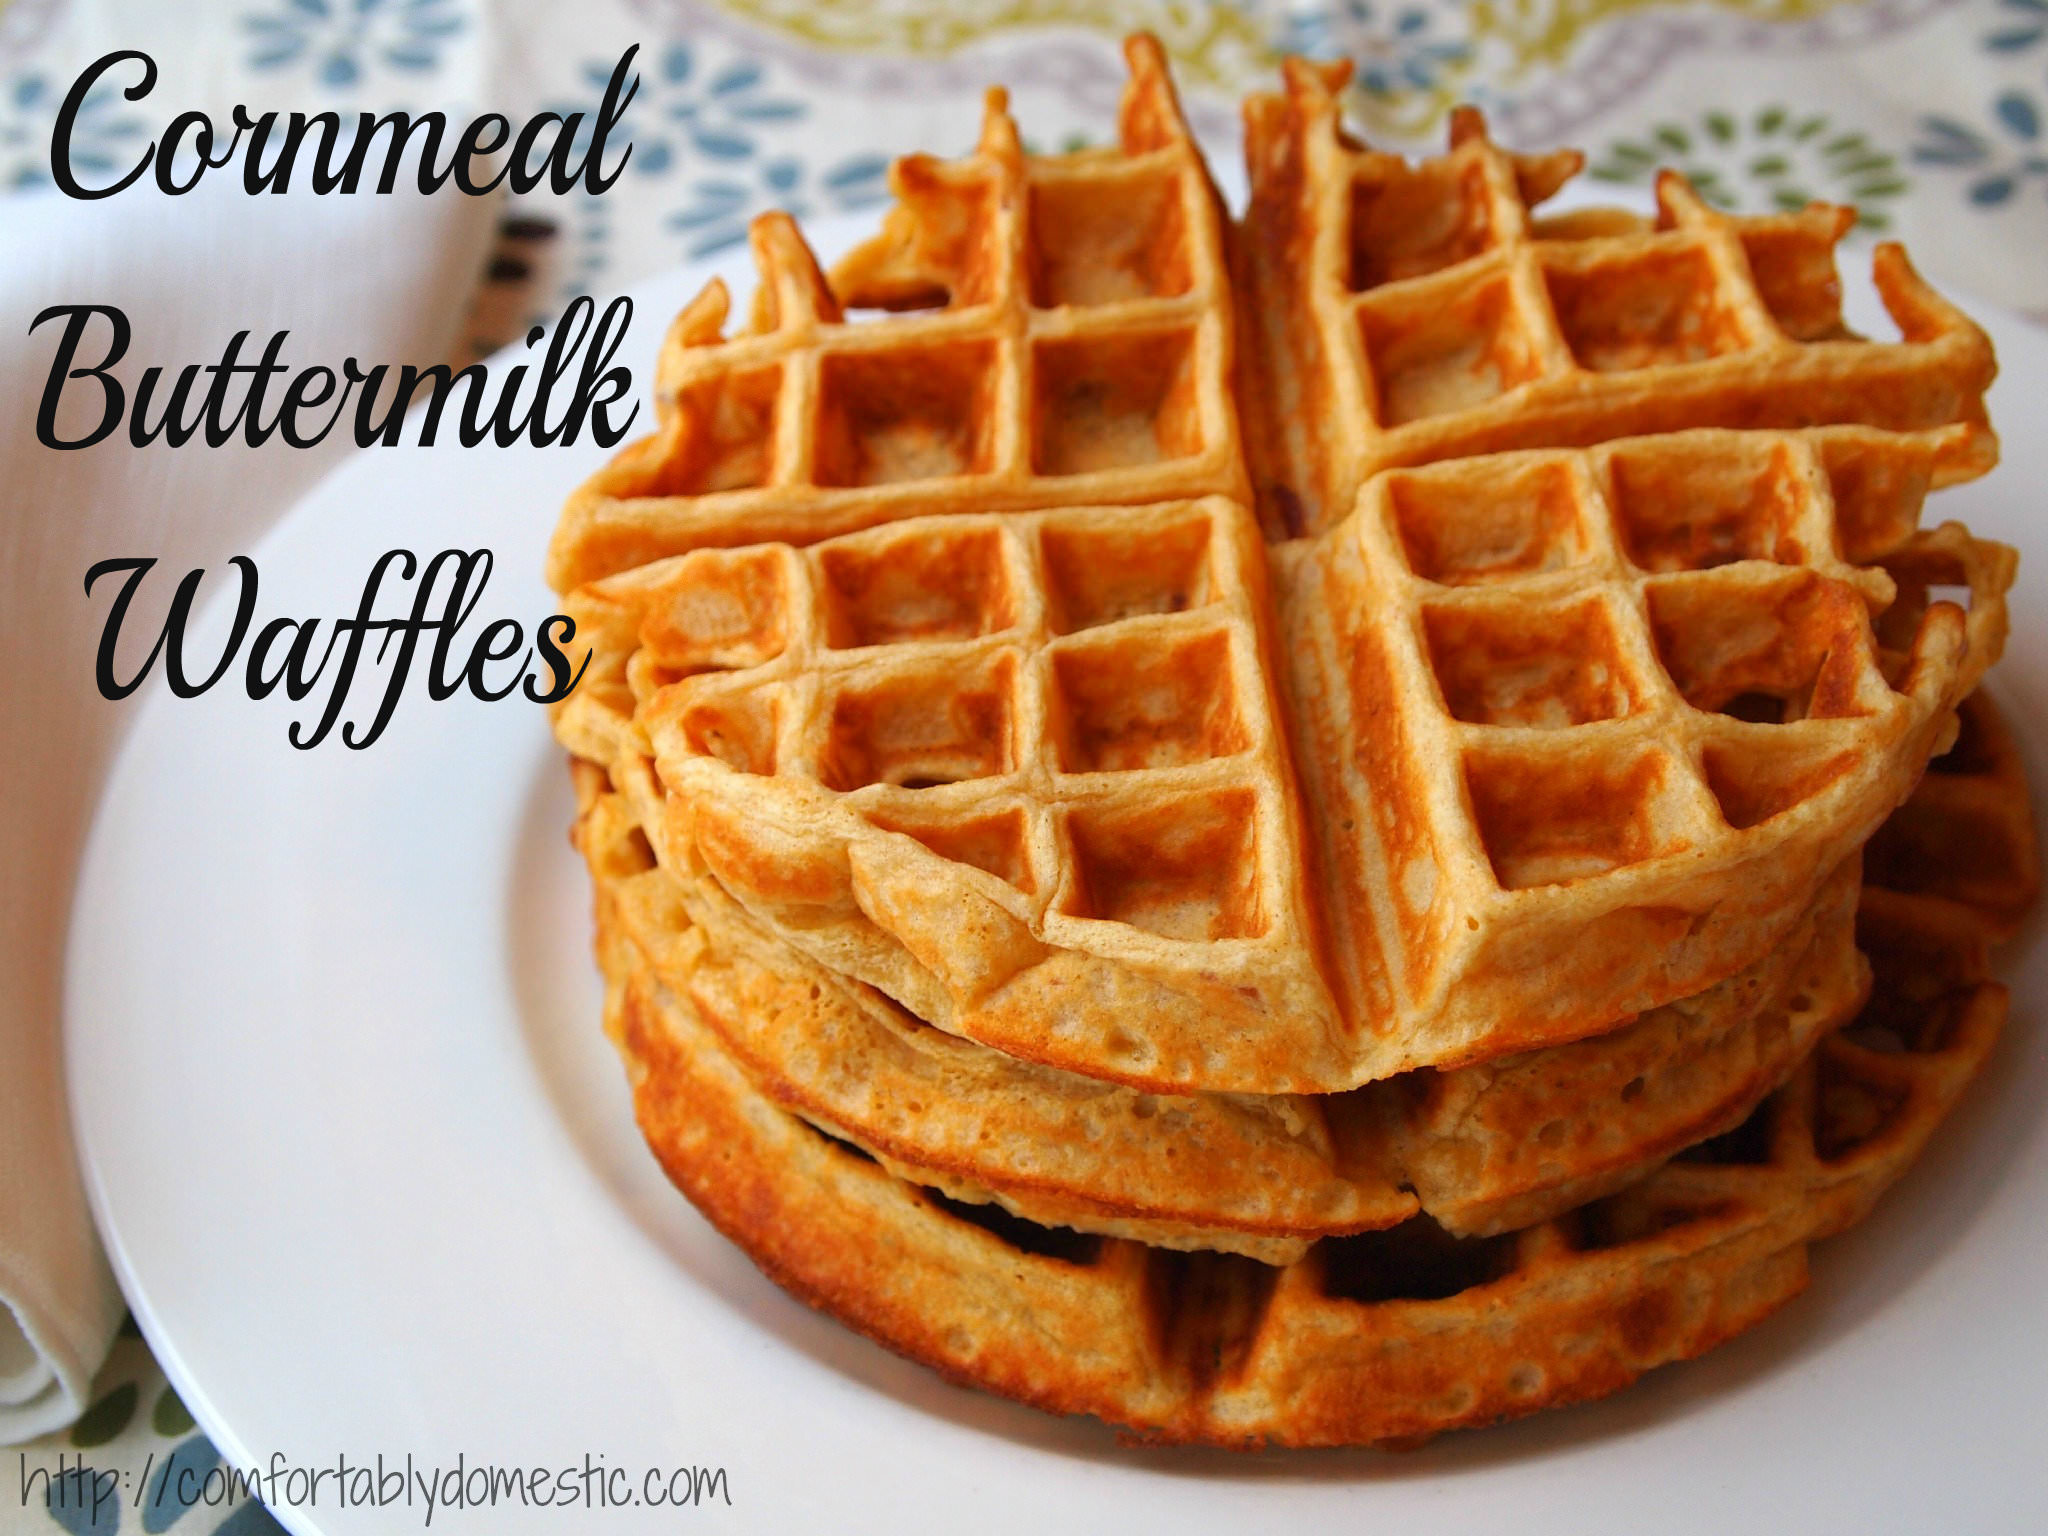 Cornmeal Buttermilk Waffles | Comfortably Domestic